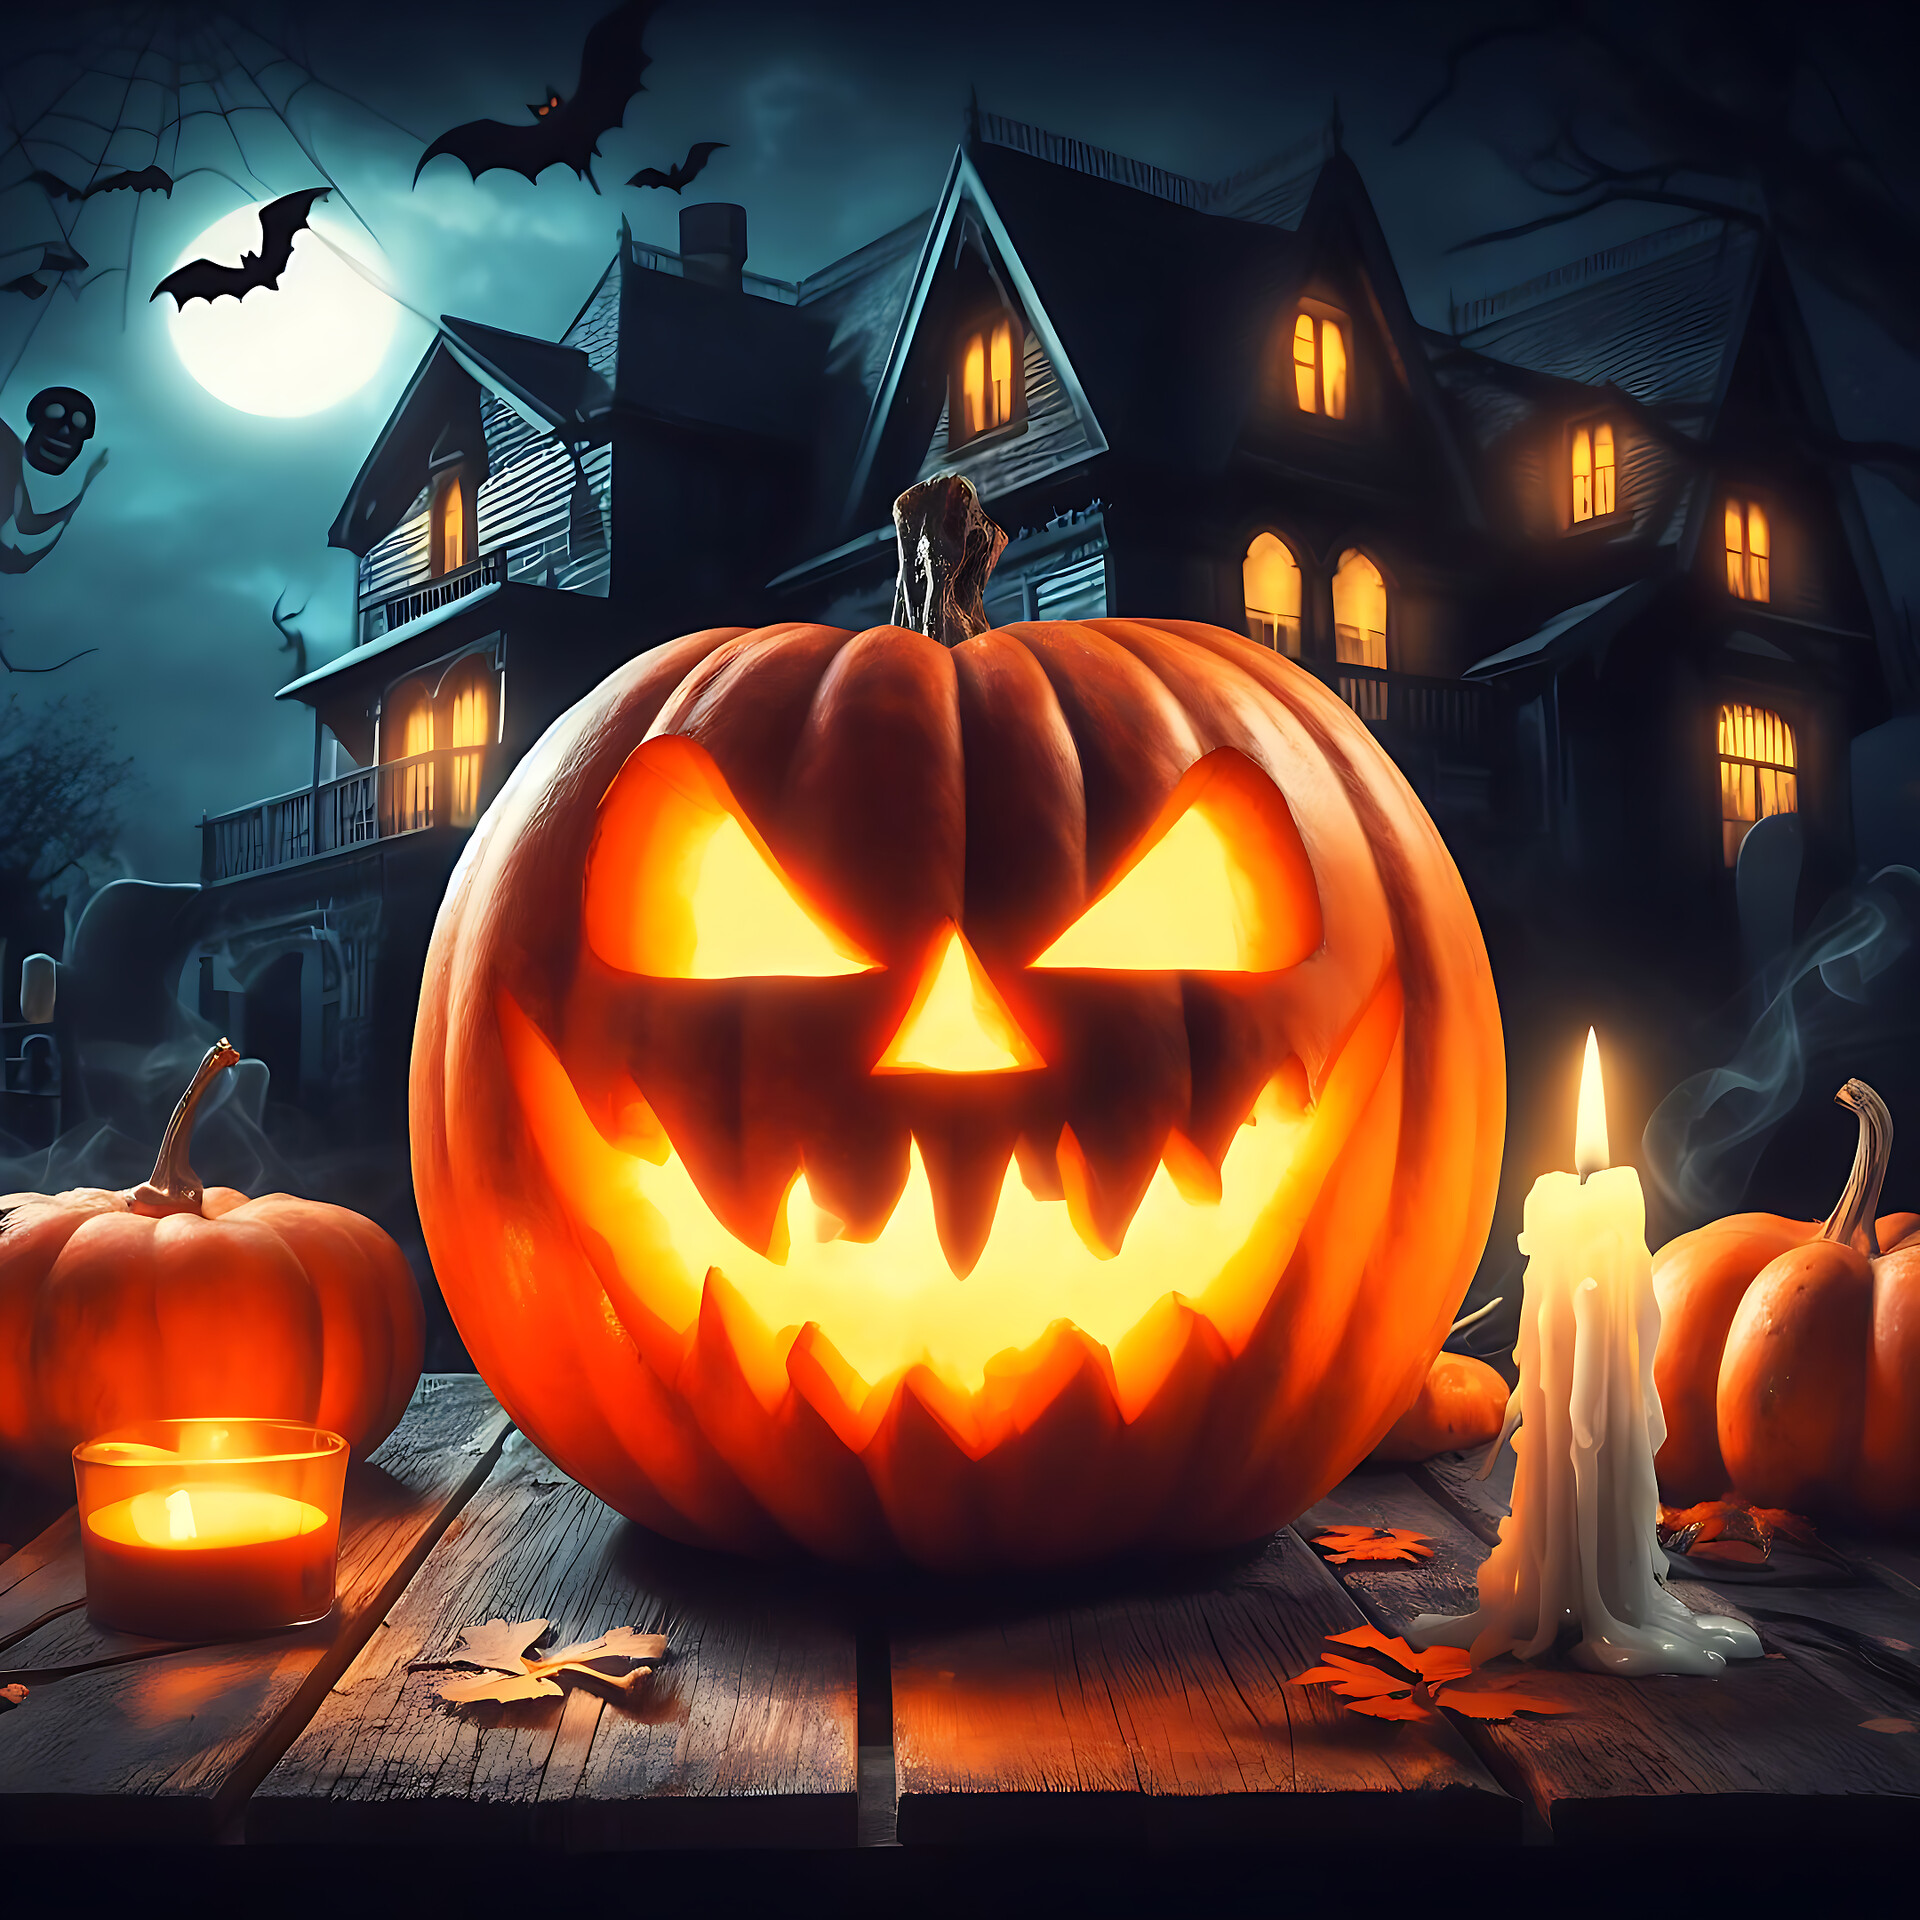 ArtStation - Pumpkin Dreams Under the Moonlight: My Magical Halloween ...